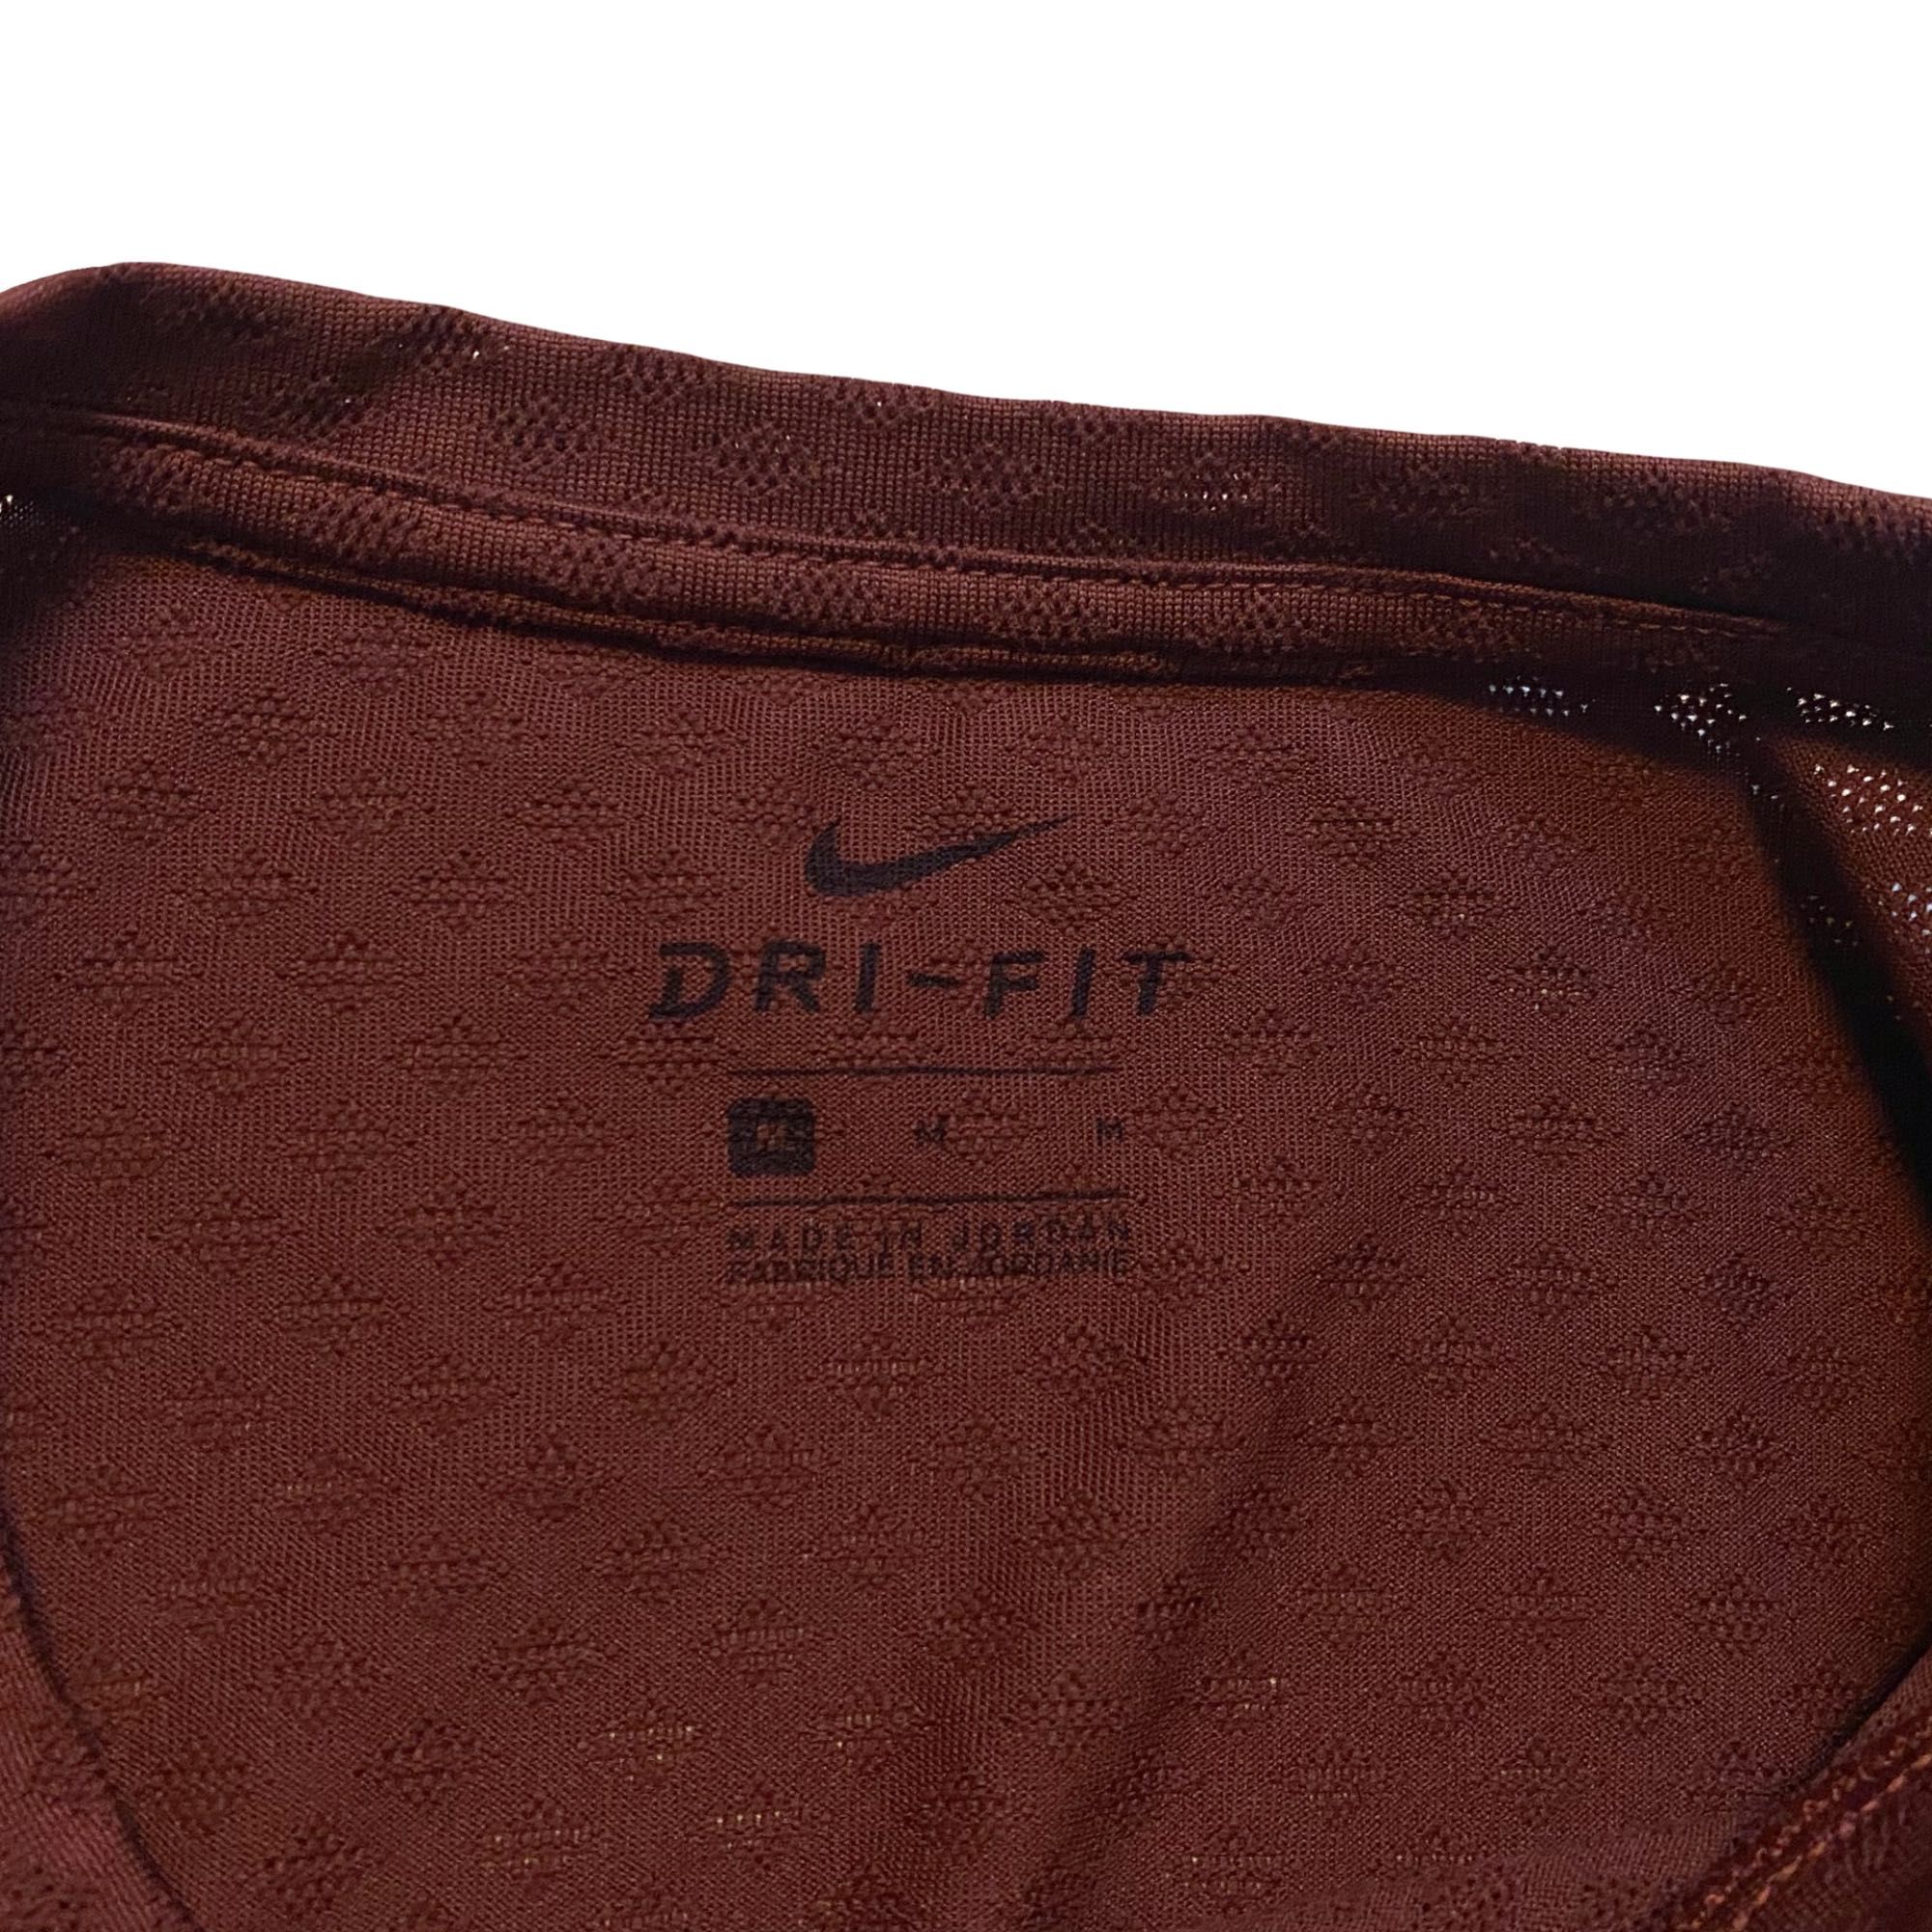 Футболка Nike Dri-fit